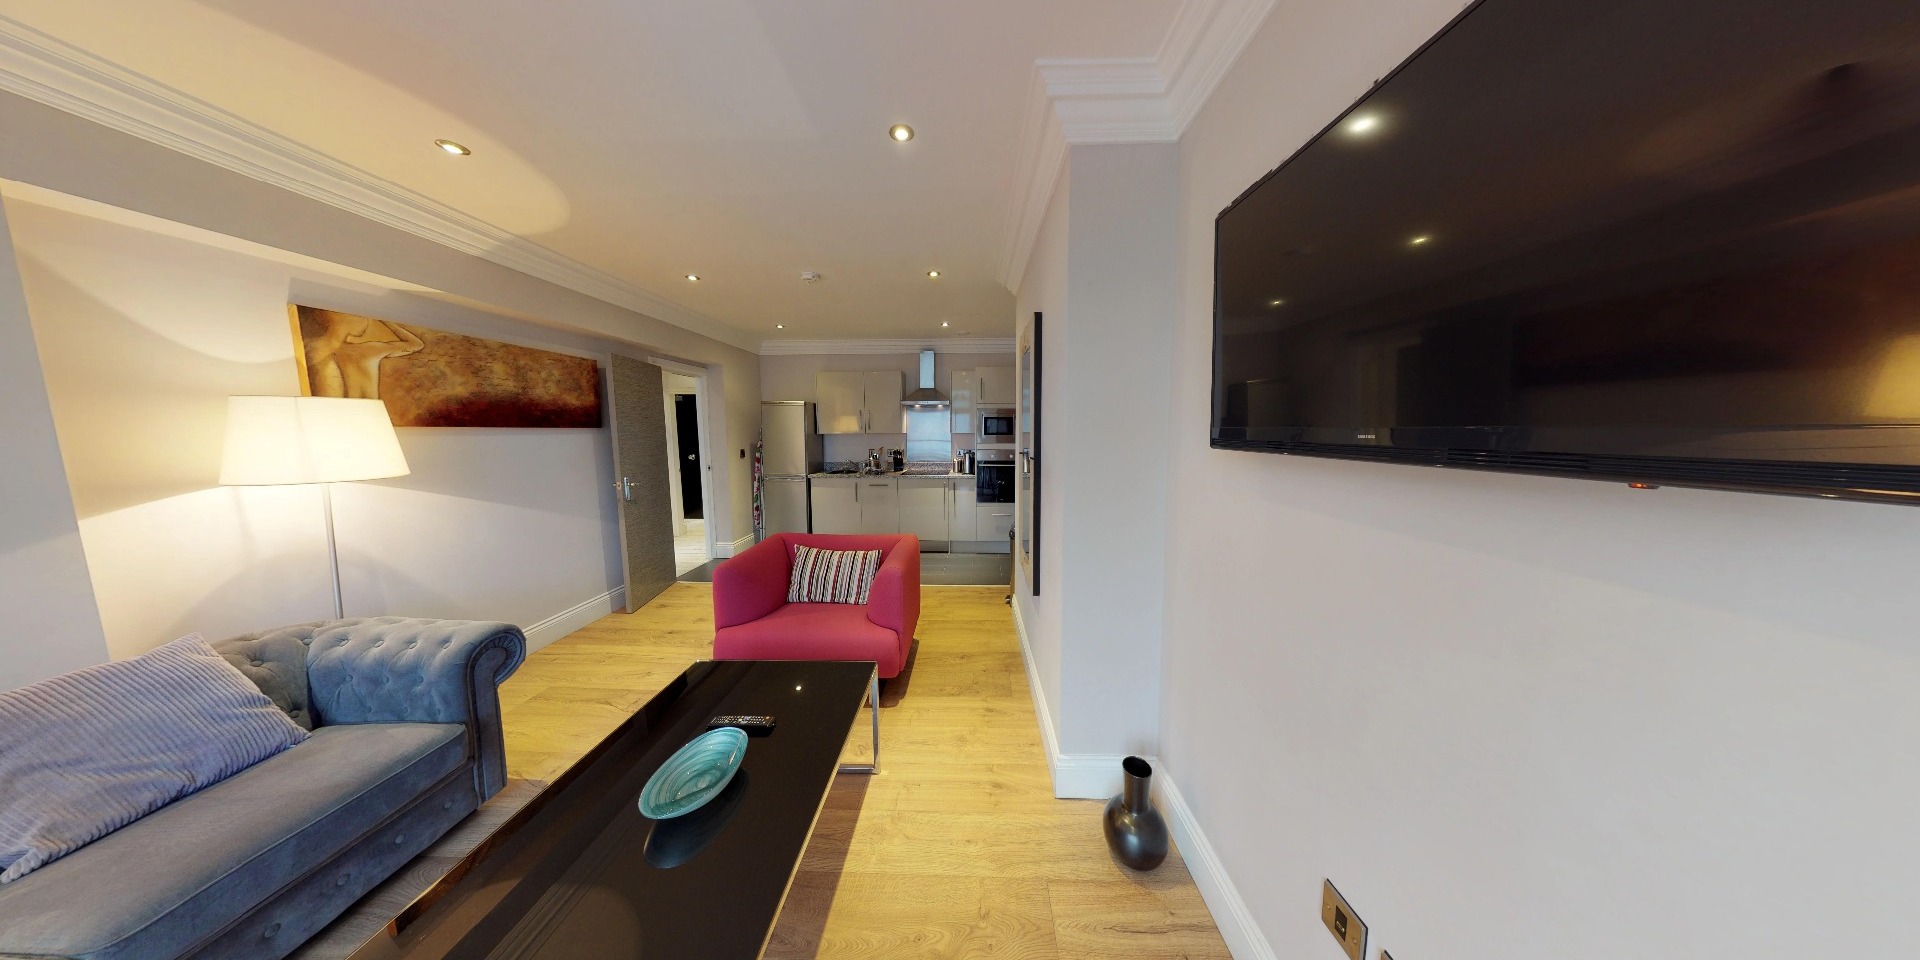 Luxury accommodation Harrogate